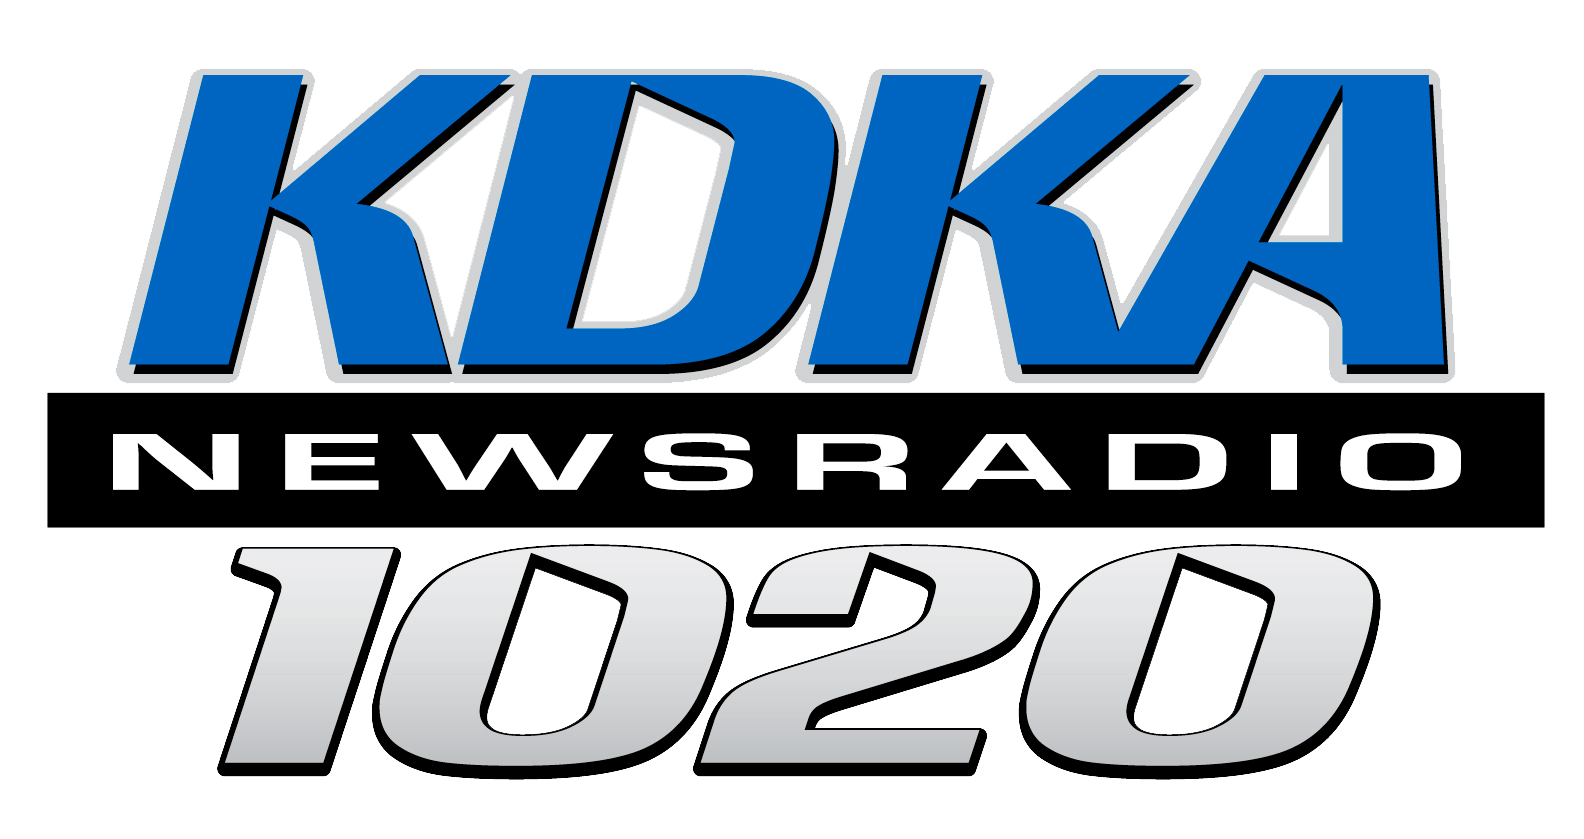 KDKA Logo - KDKA (AM) | Logopedia | FANDOM powered by Wikia